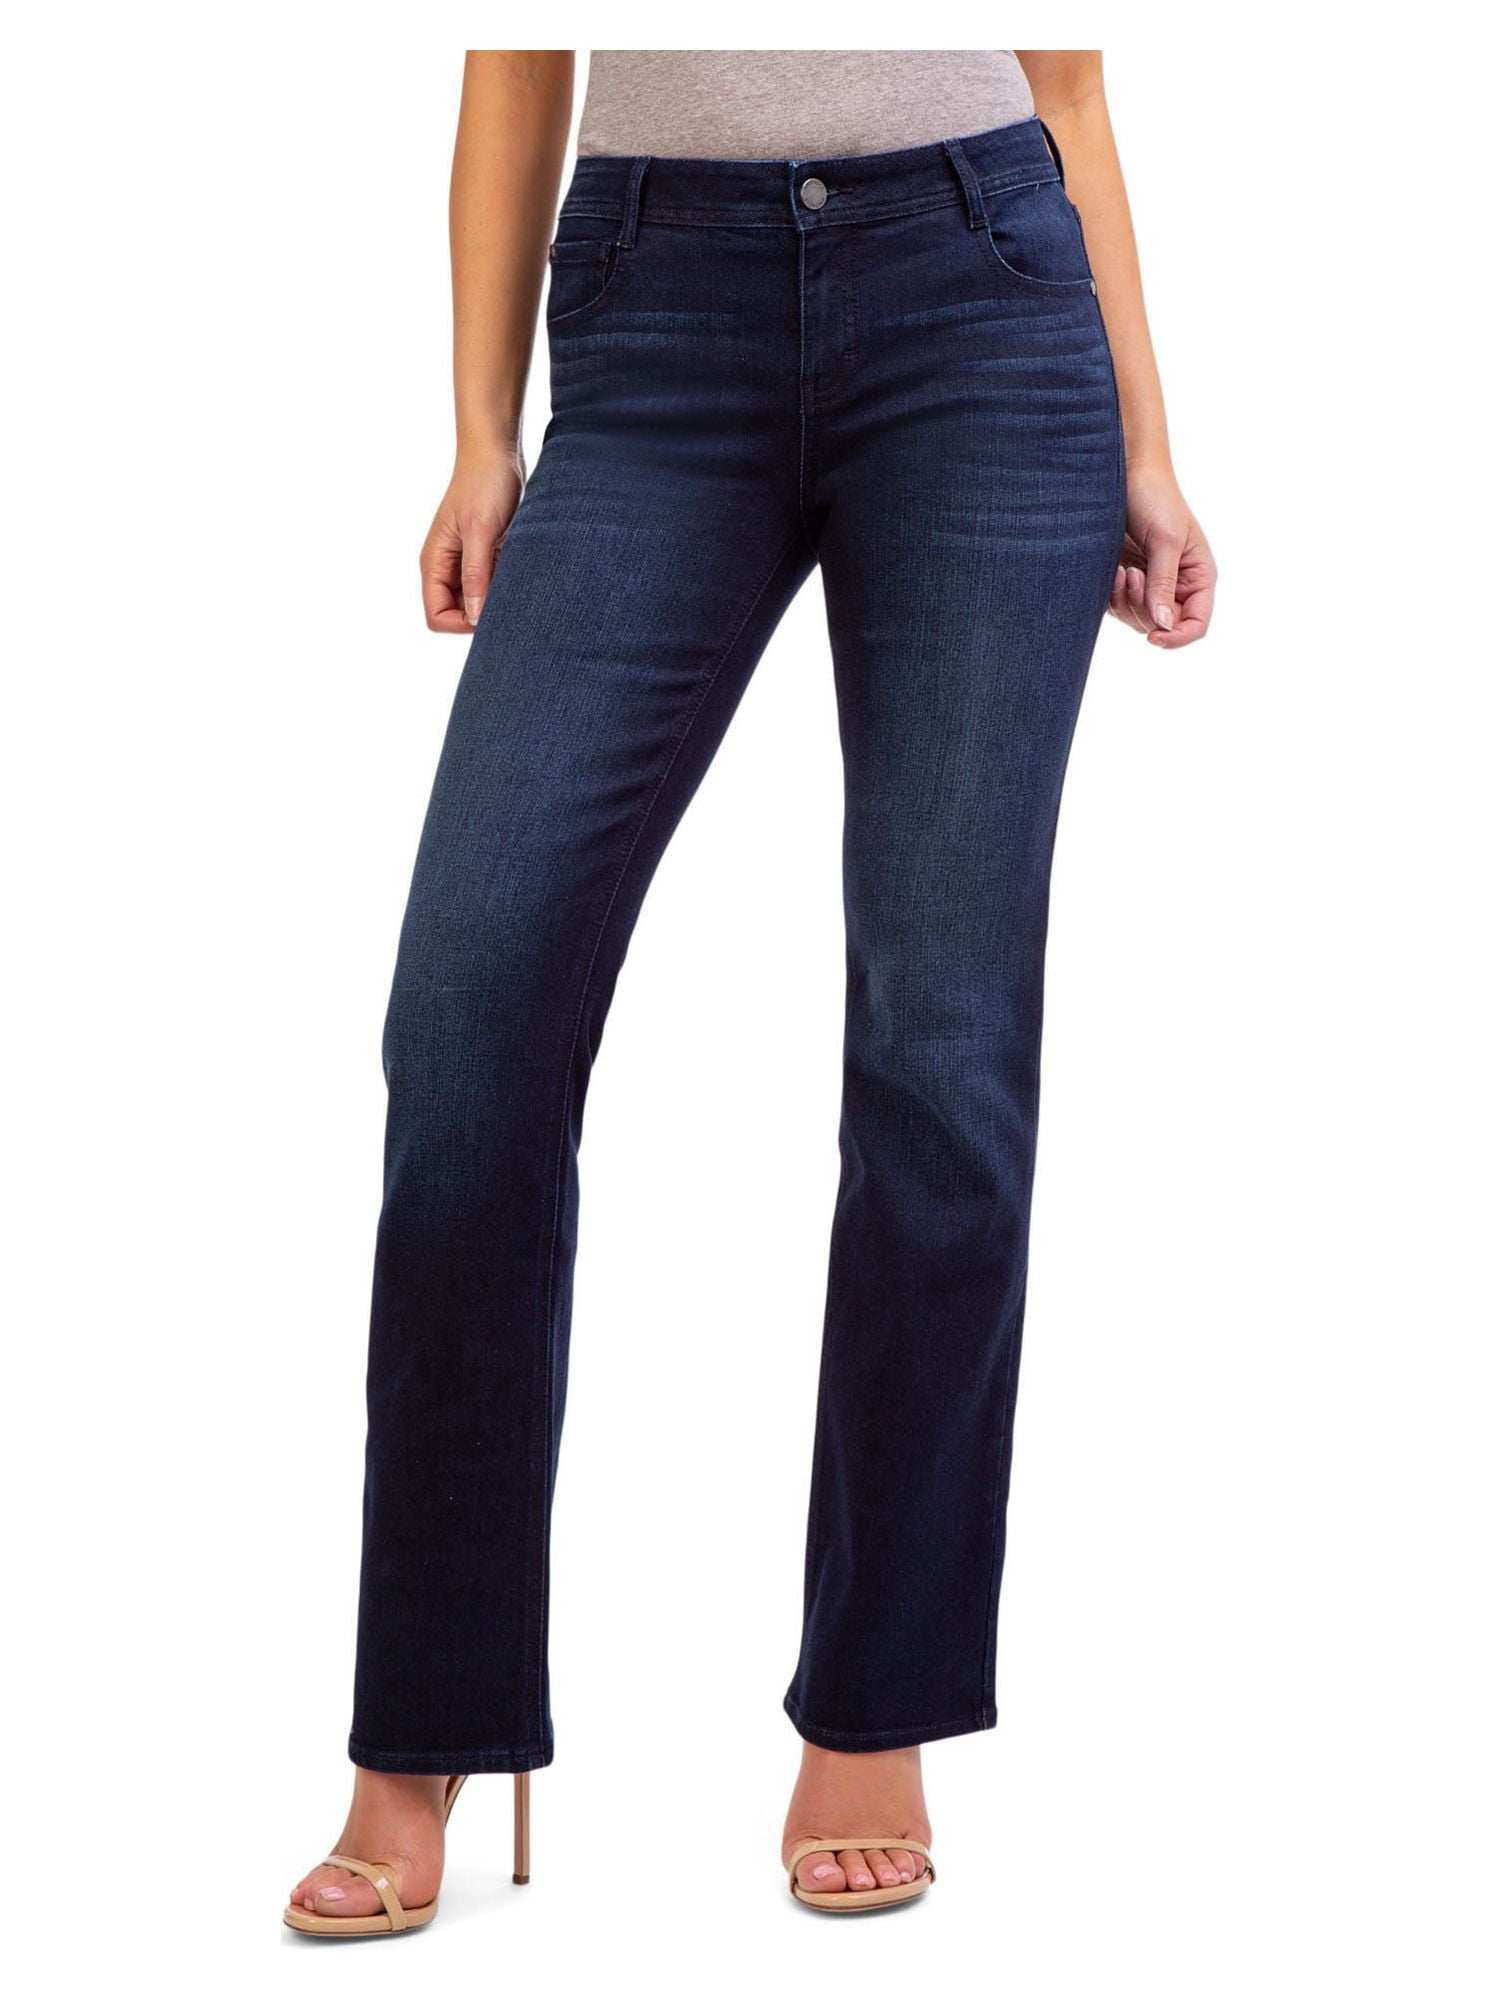 Jordache Women's Mid Rise Bootcut Jeans, Regular and Short Inseam 